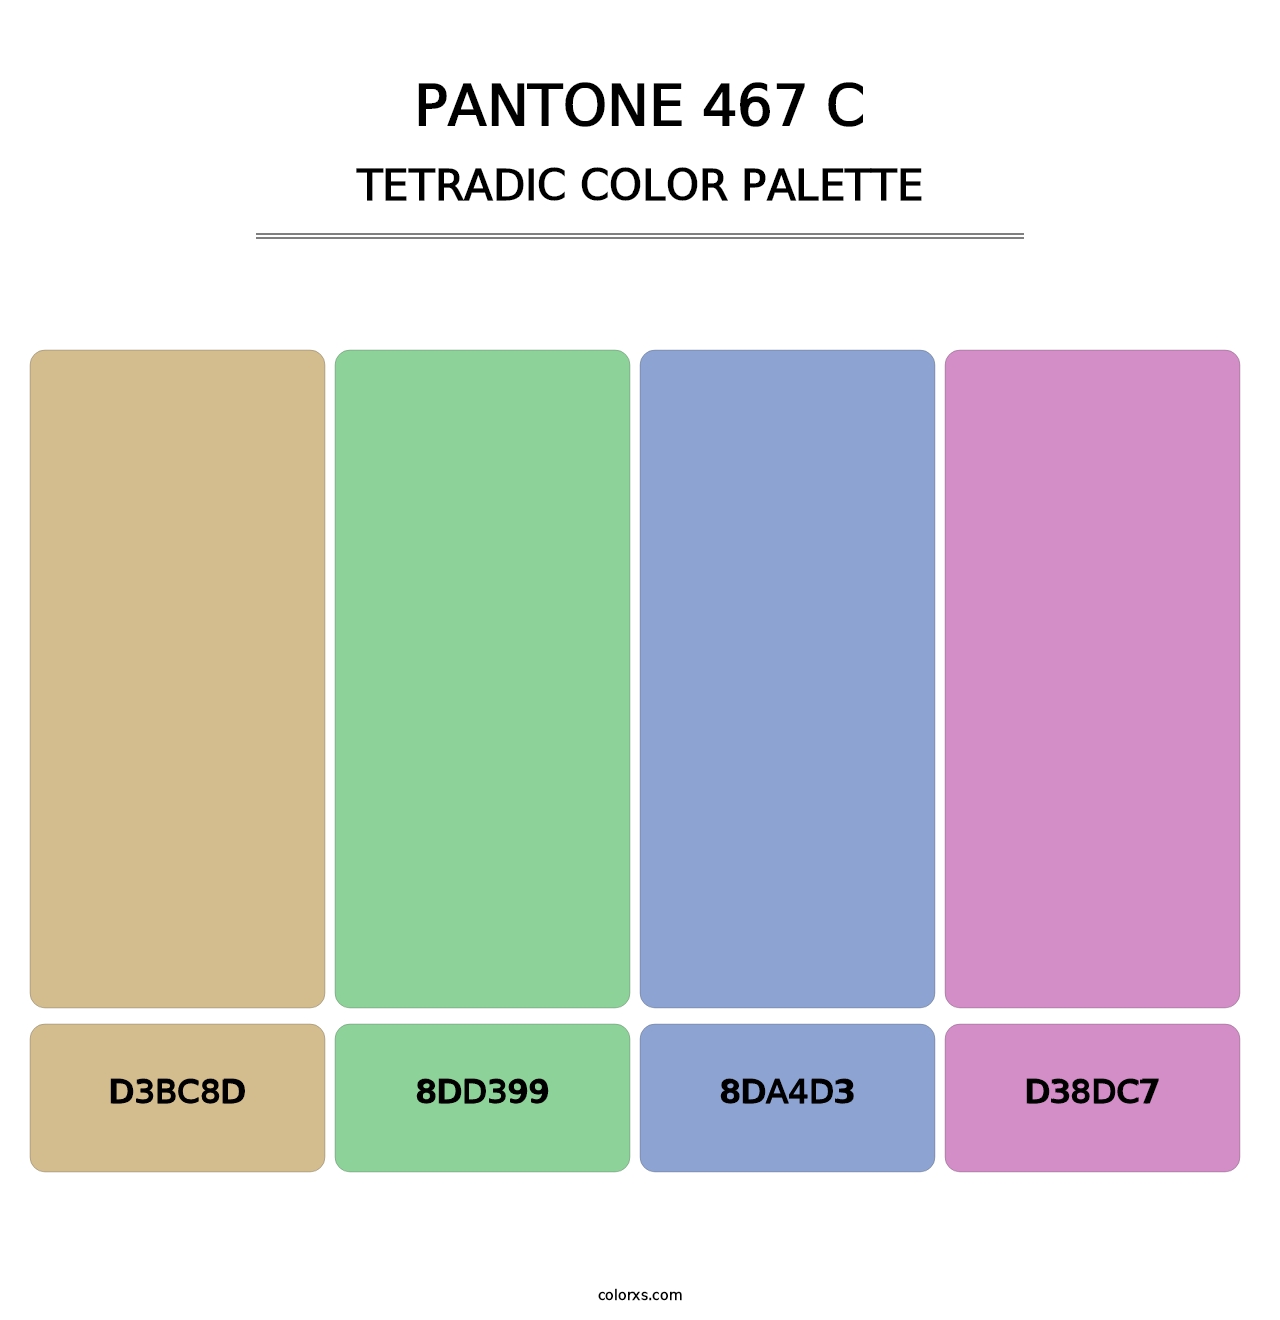 PANTONE 467 C - Tetradic Color Palette